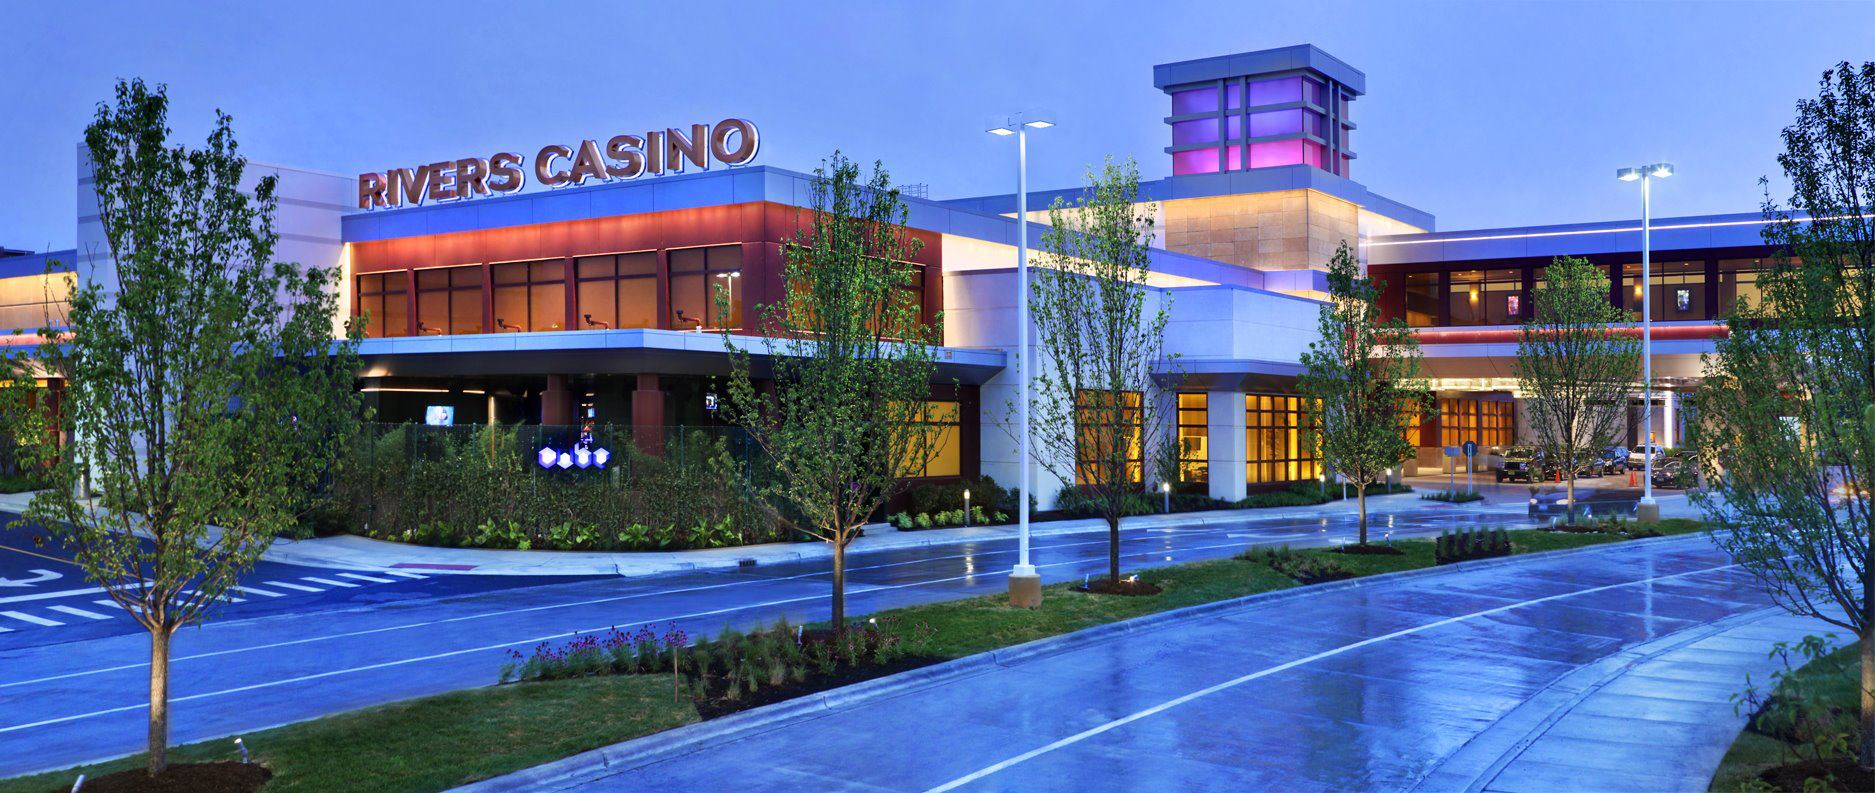 restaurants near rivers casino